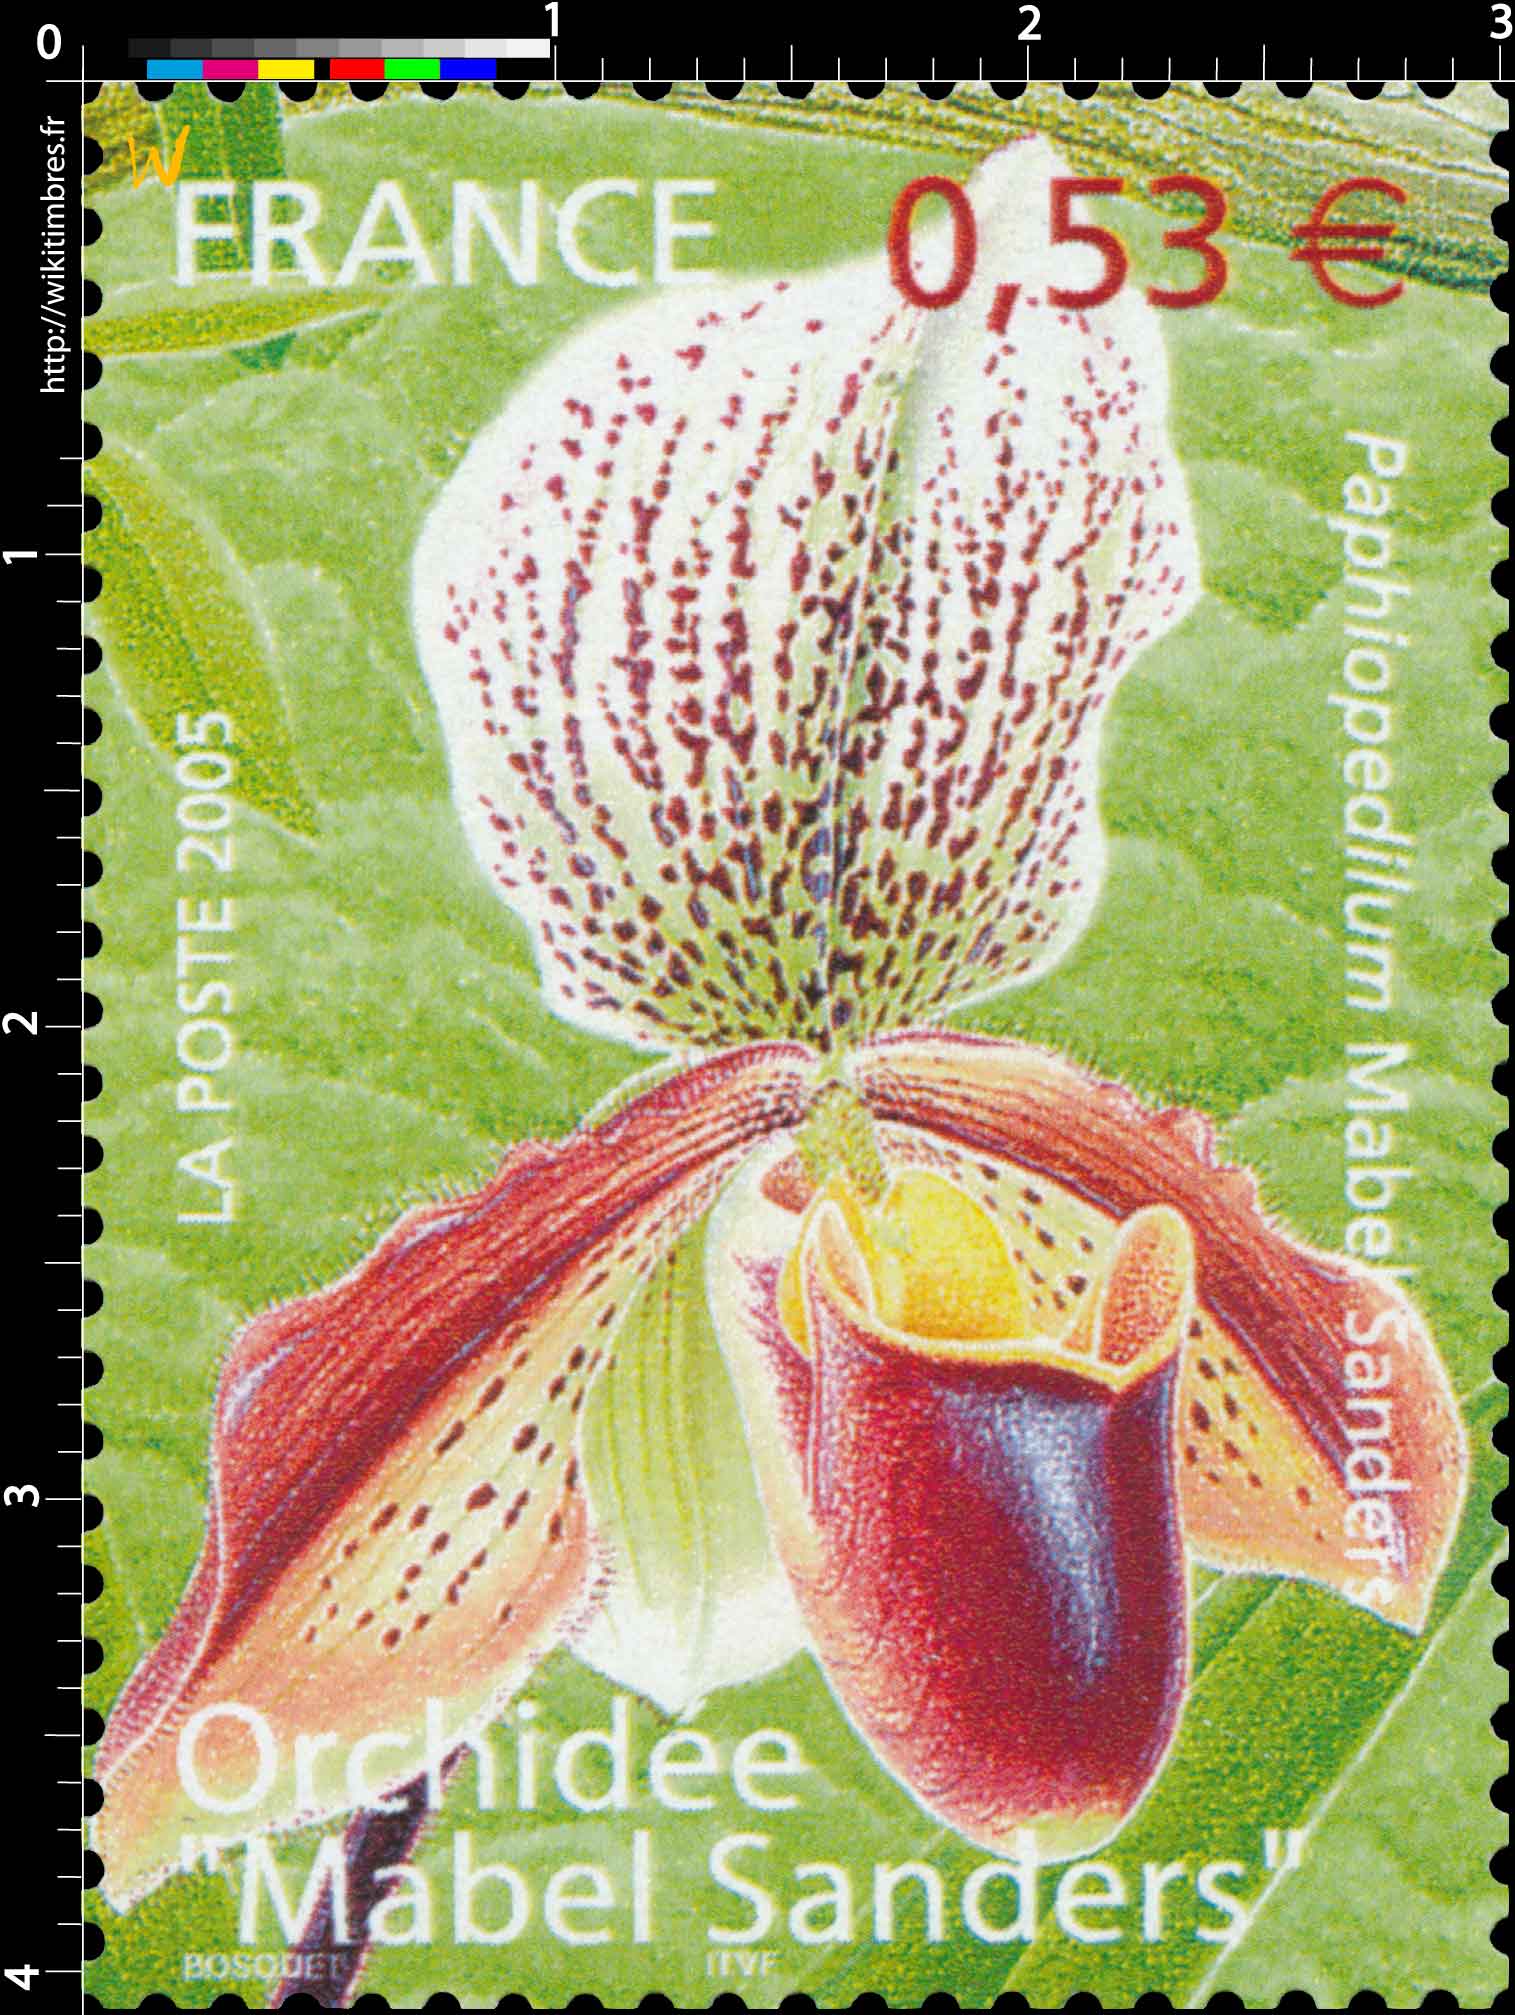 2005 Orchidée Mabel Sanders Paphiopedilum Mabel Sanders